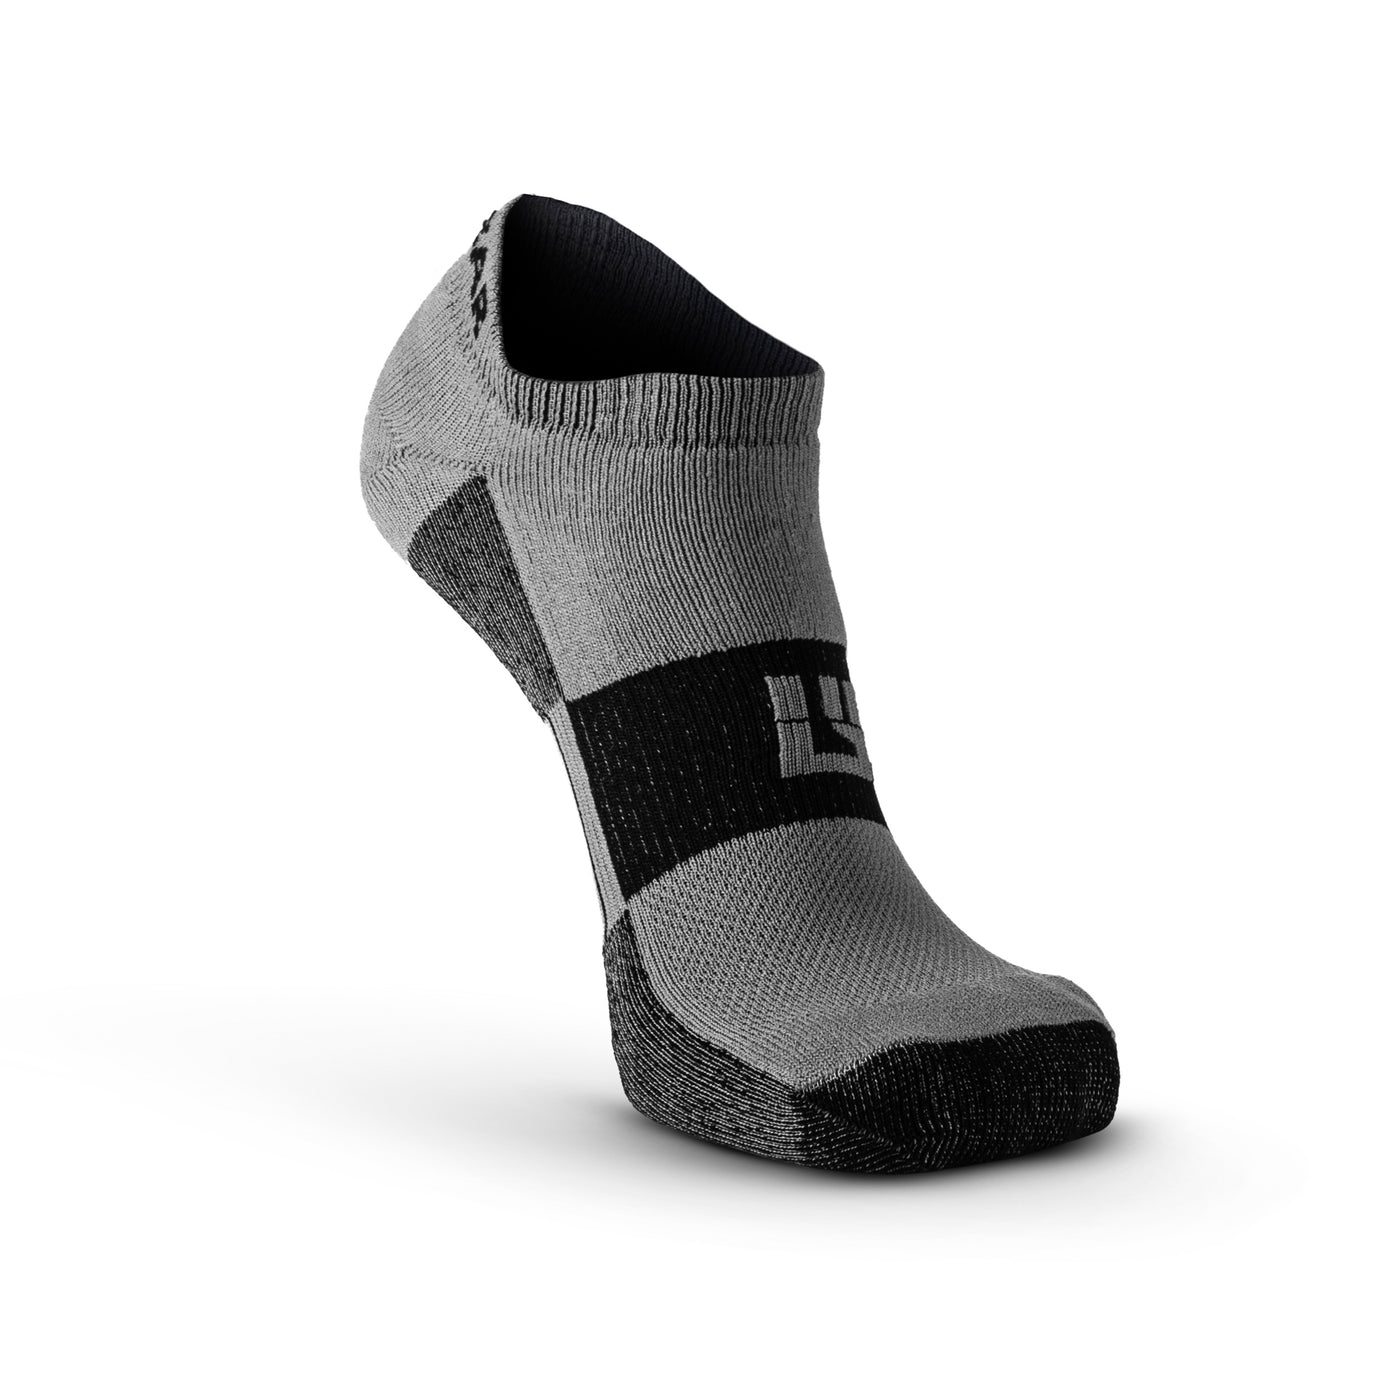 No-Show Running Socks - Gray/Black (2 Pair Pack)